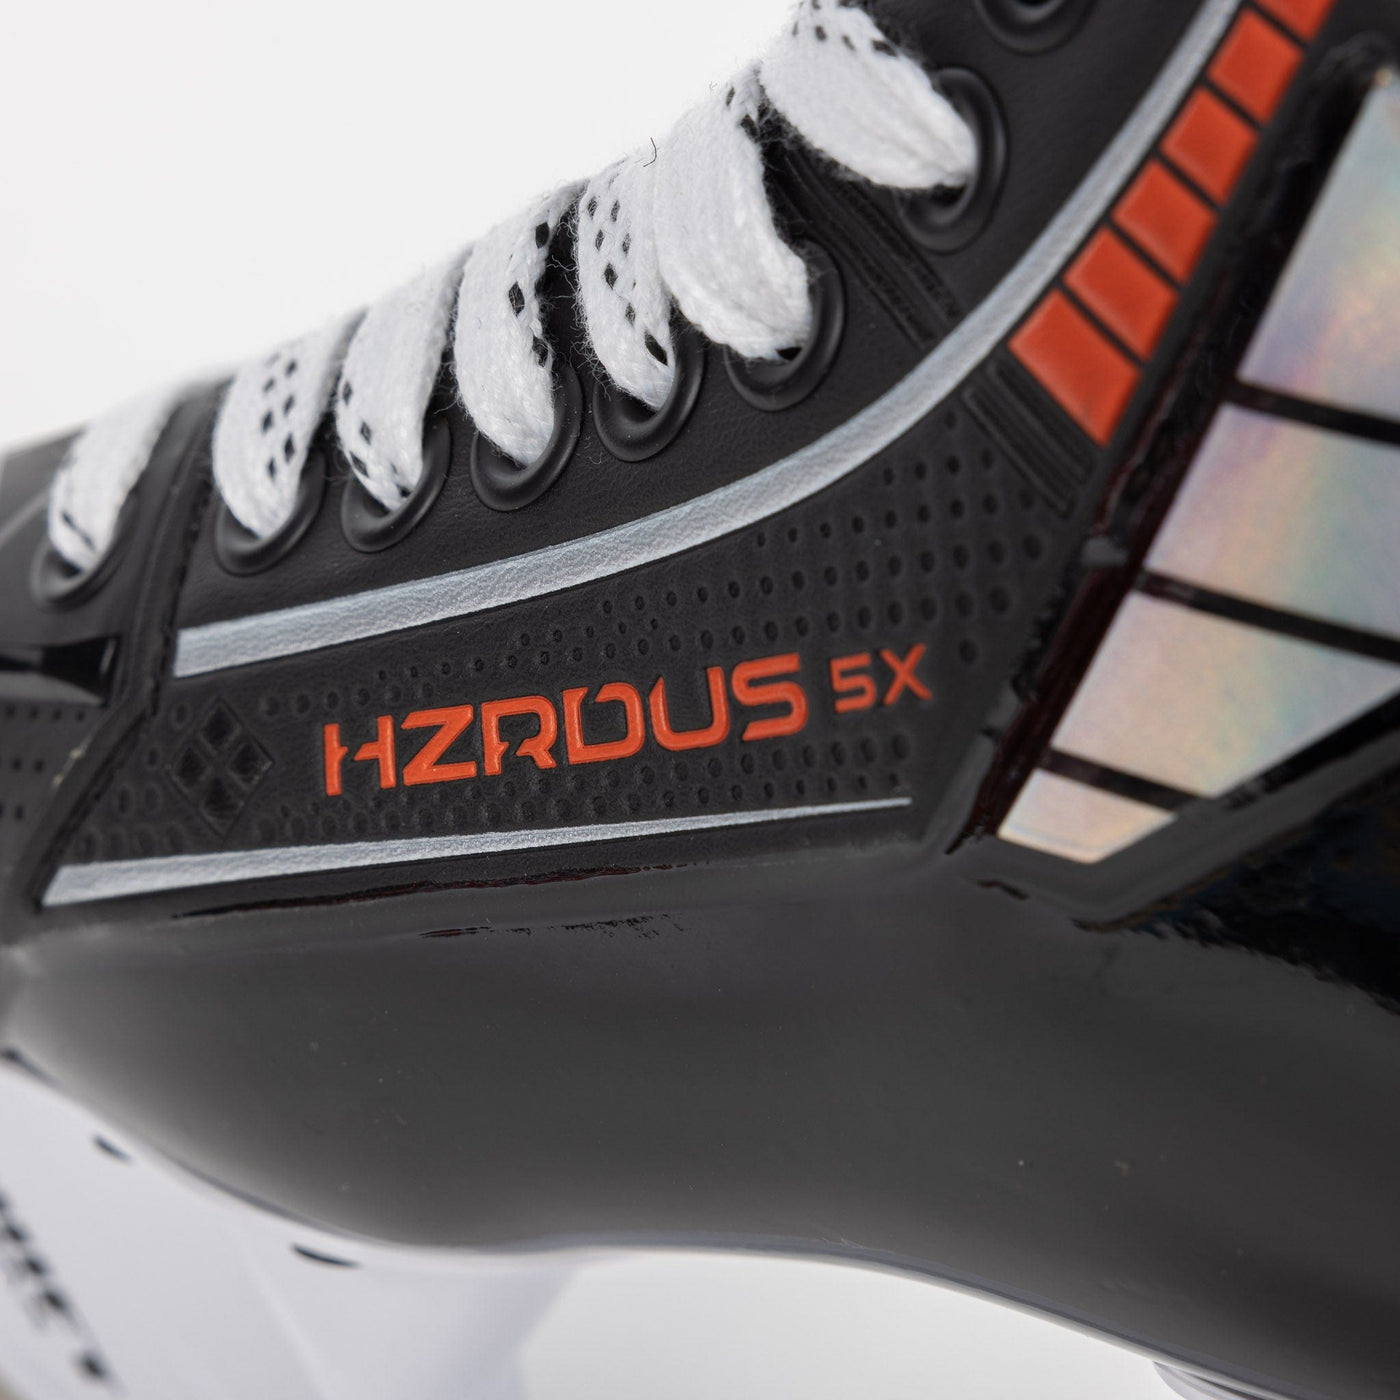 True HZRDUS 5X Senior Hockey Skates - The Hockey Shop Source For Sports